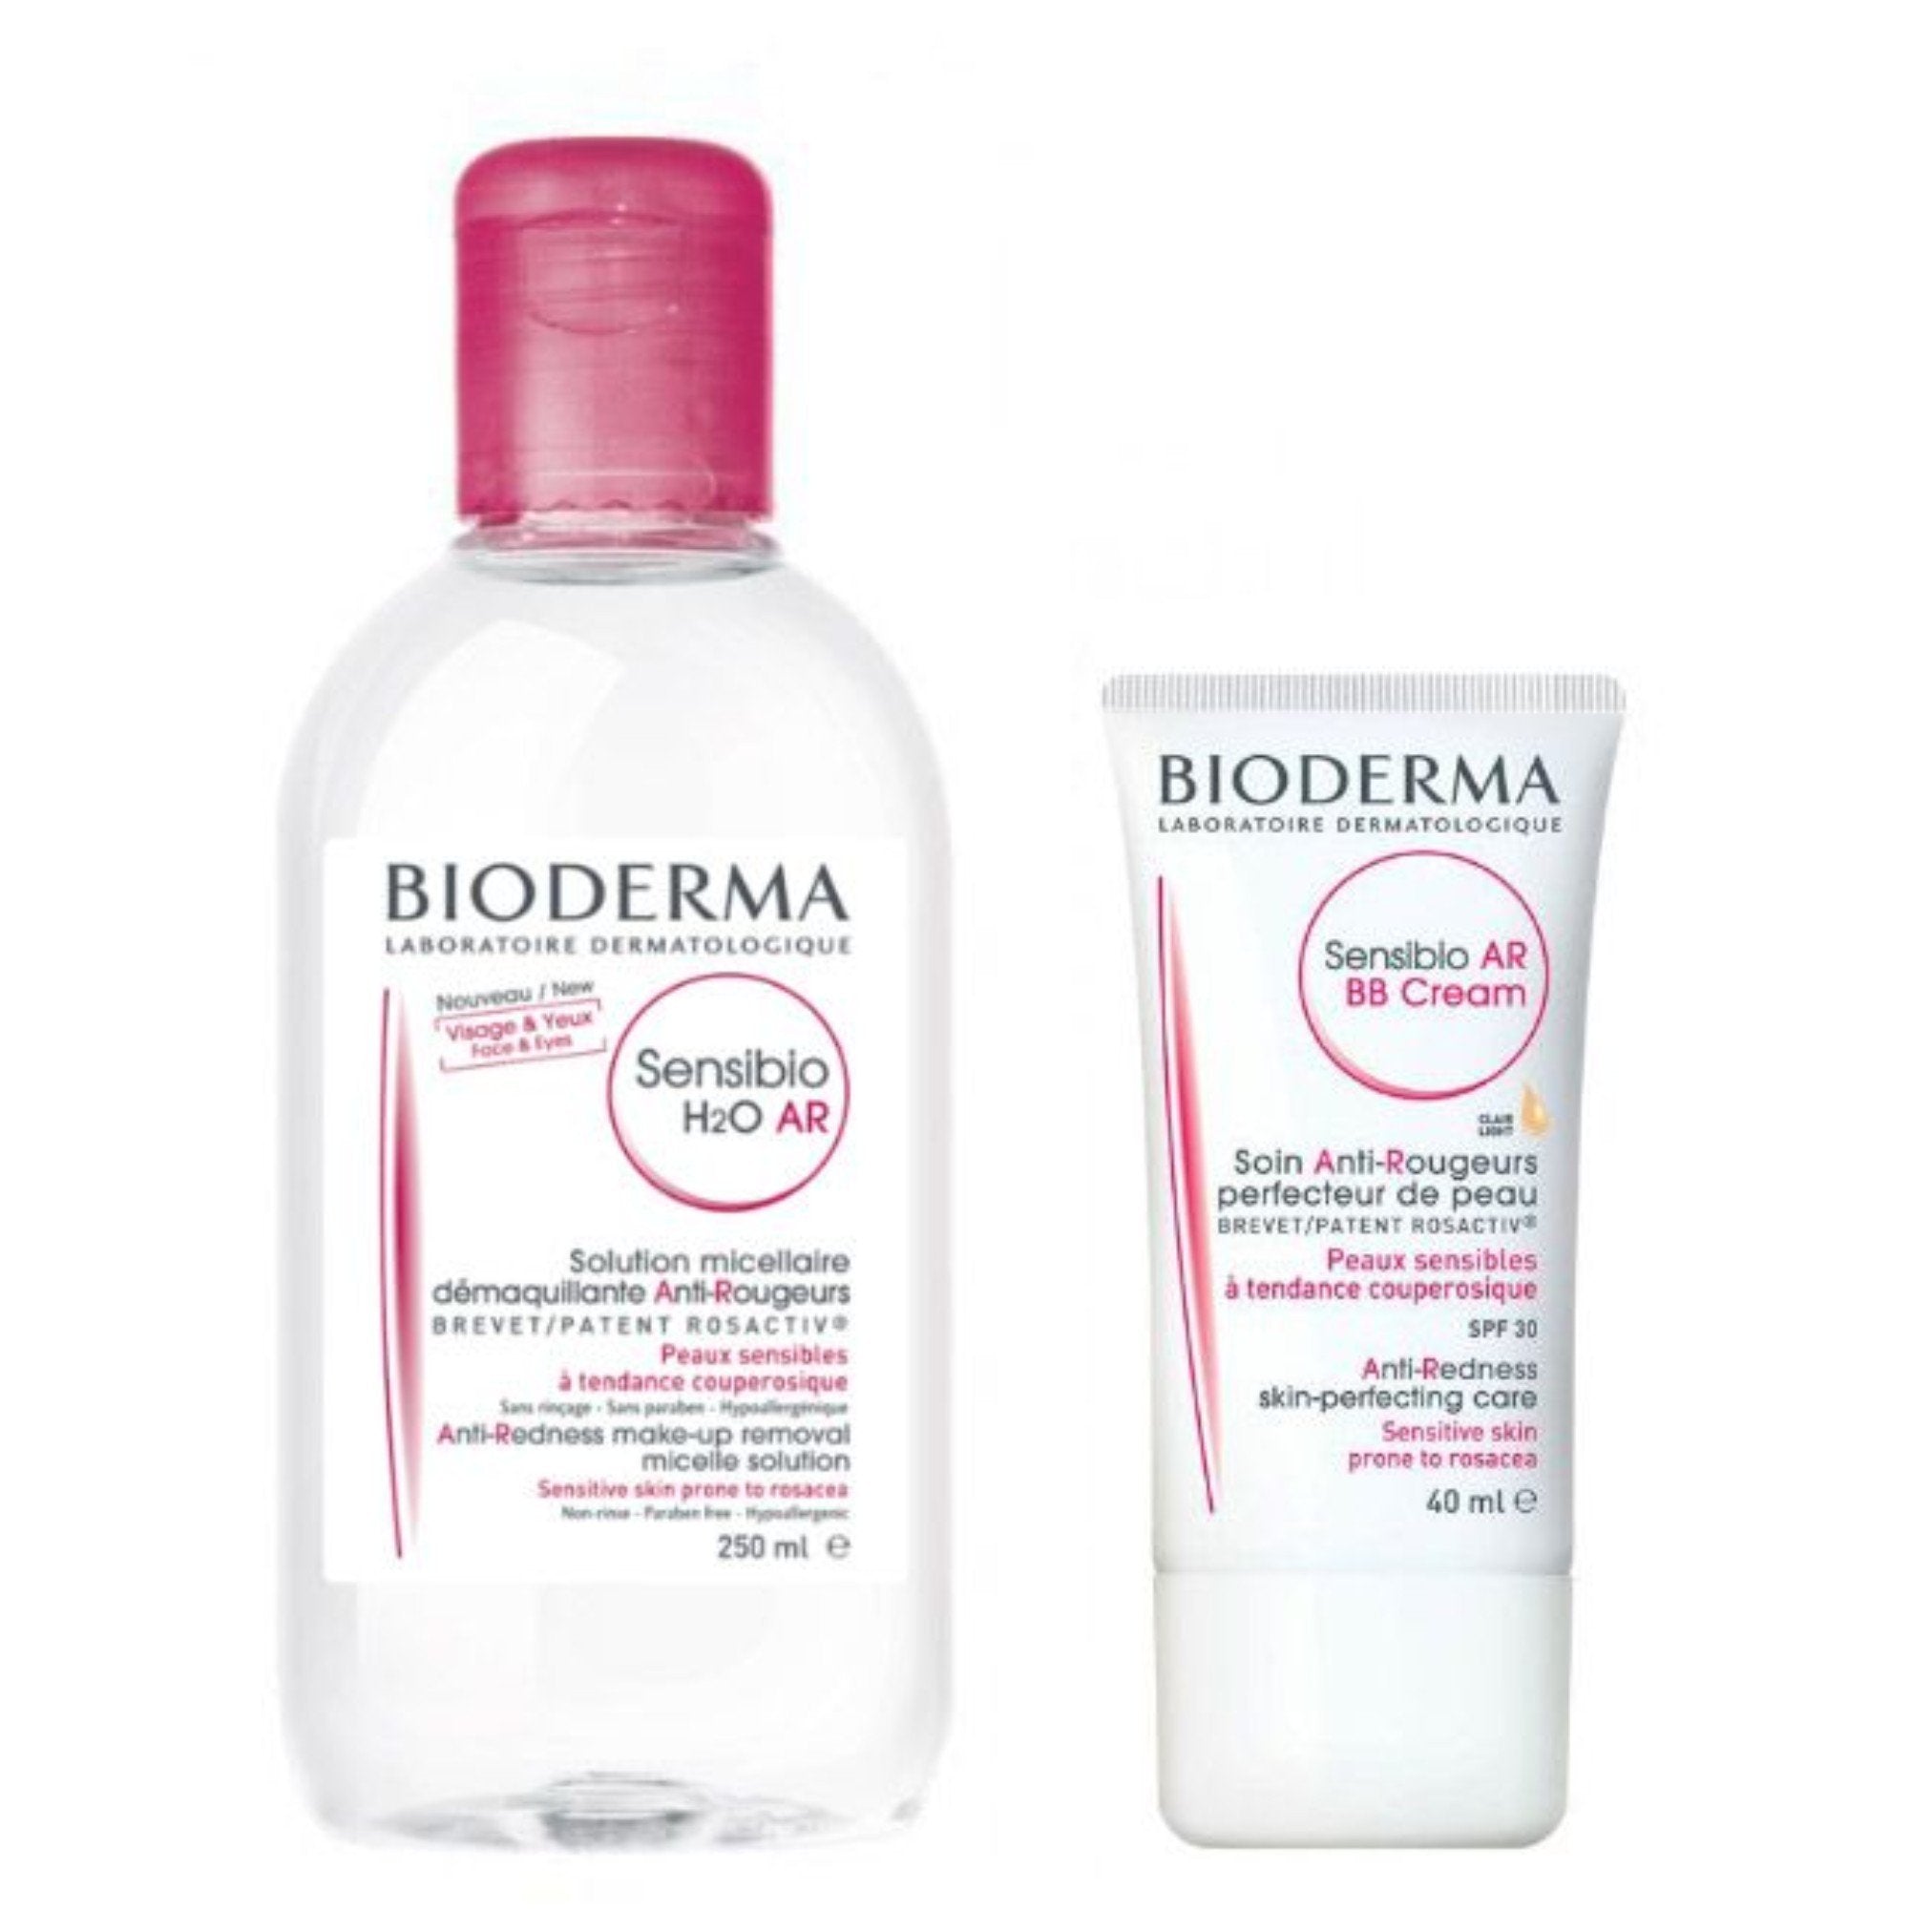 Bioderma Promo Pack: Bioderma Sensibio H2O AR Micelle Solution - 250 ml + Bioderma Sensibio H2O AR BB Cream 40ml